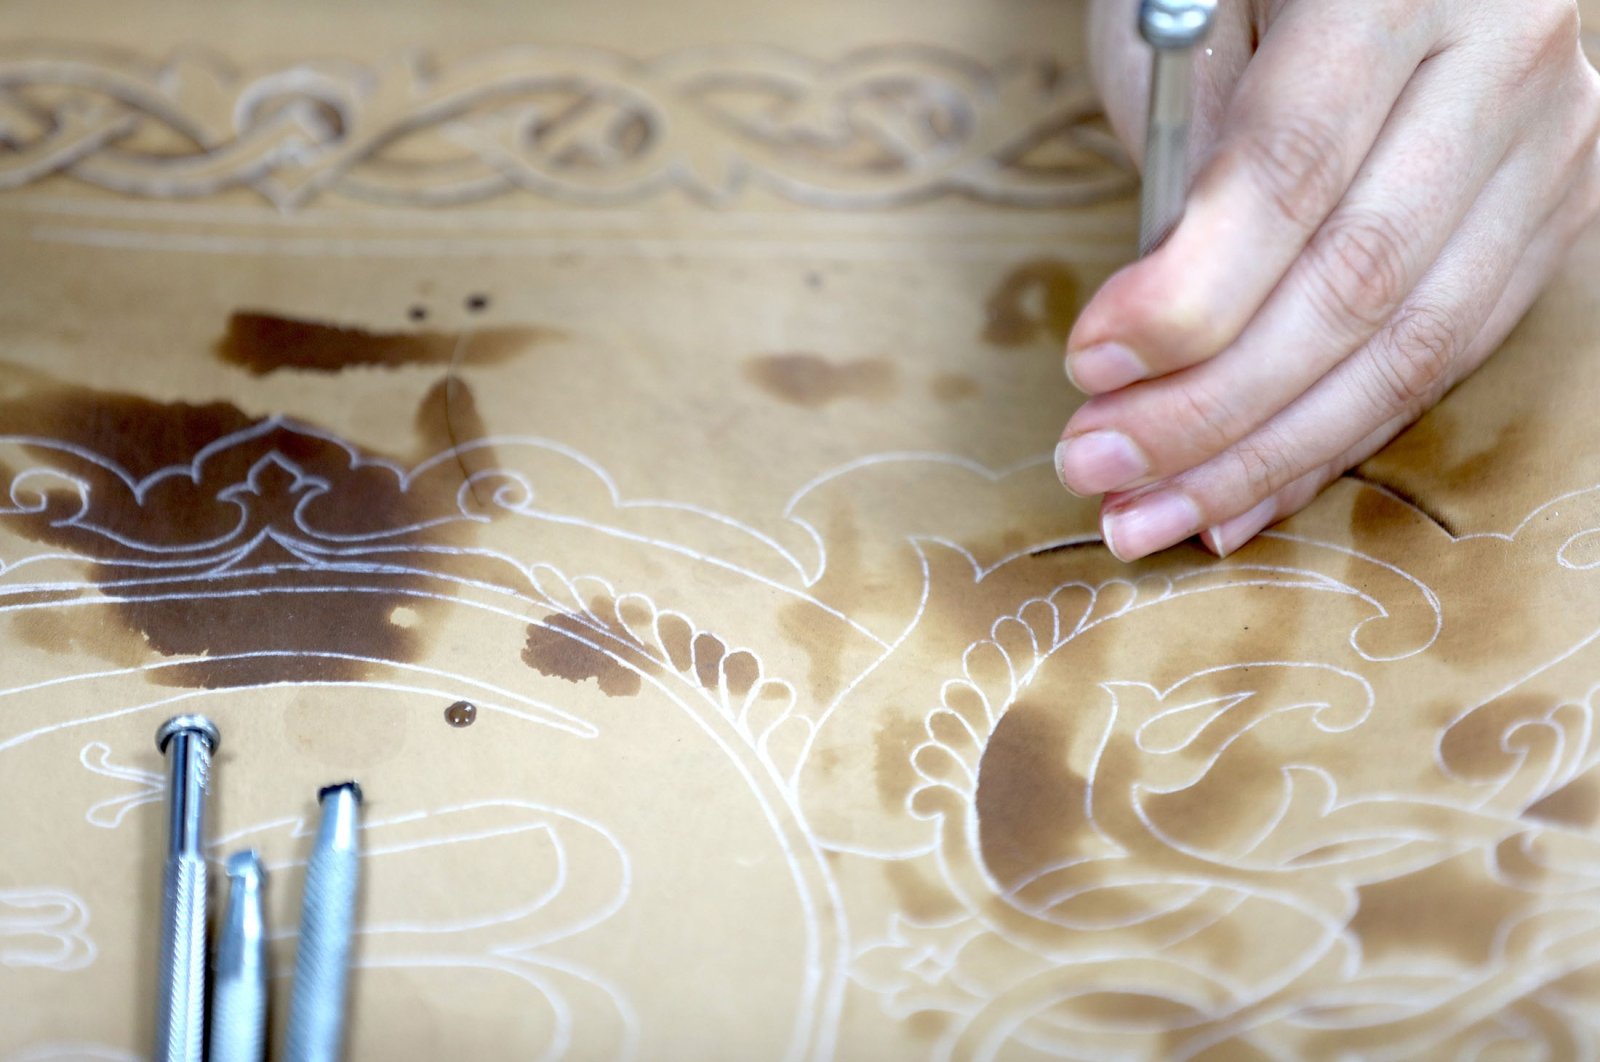 Guru kerajinan tangan mengembangkan karya seni kulit dengan tema Turki